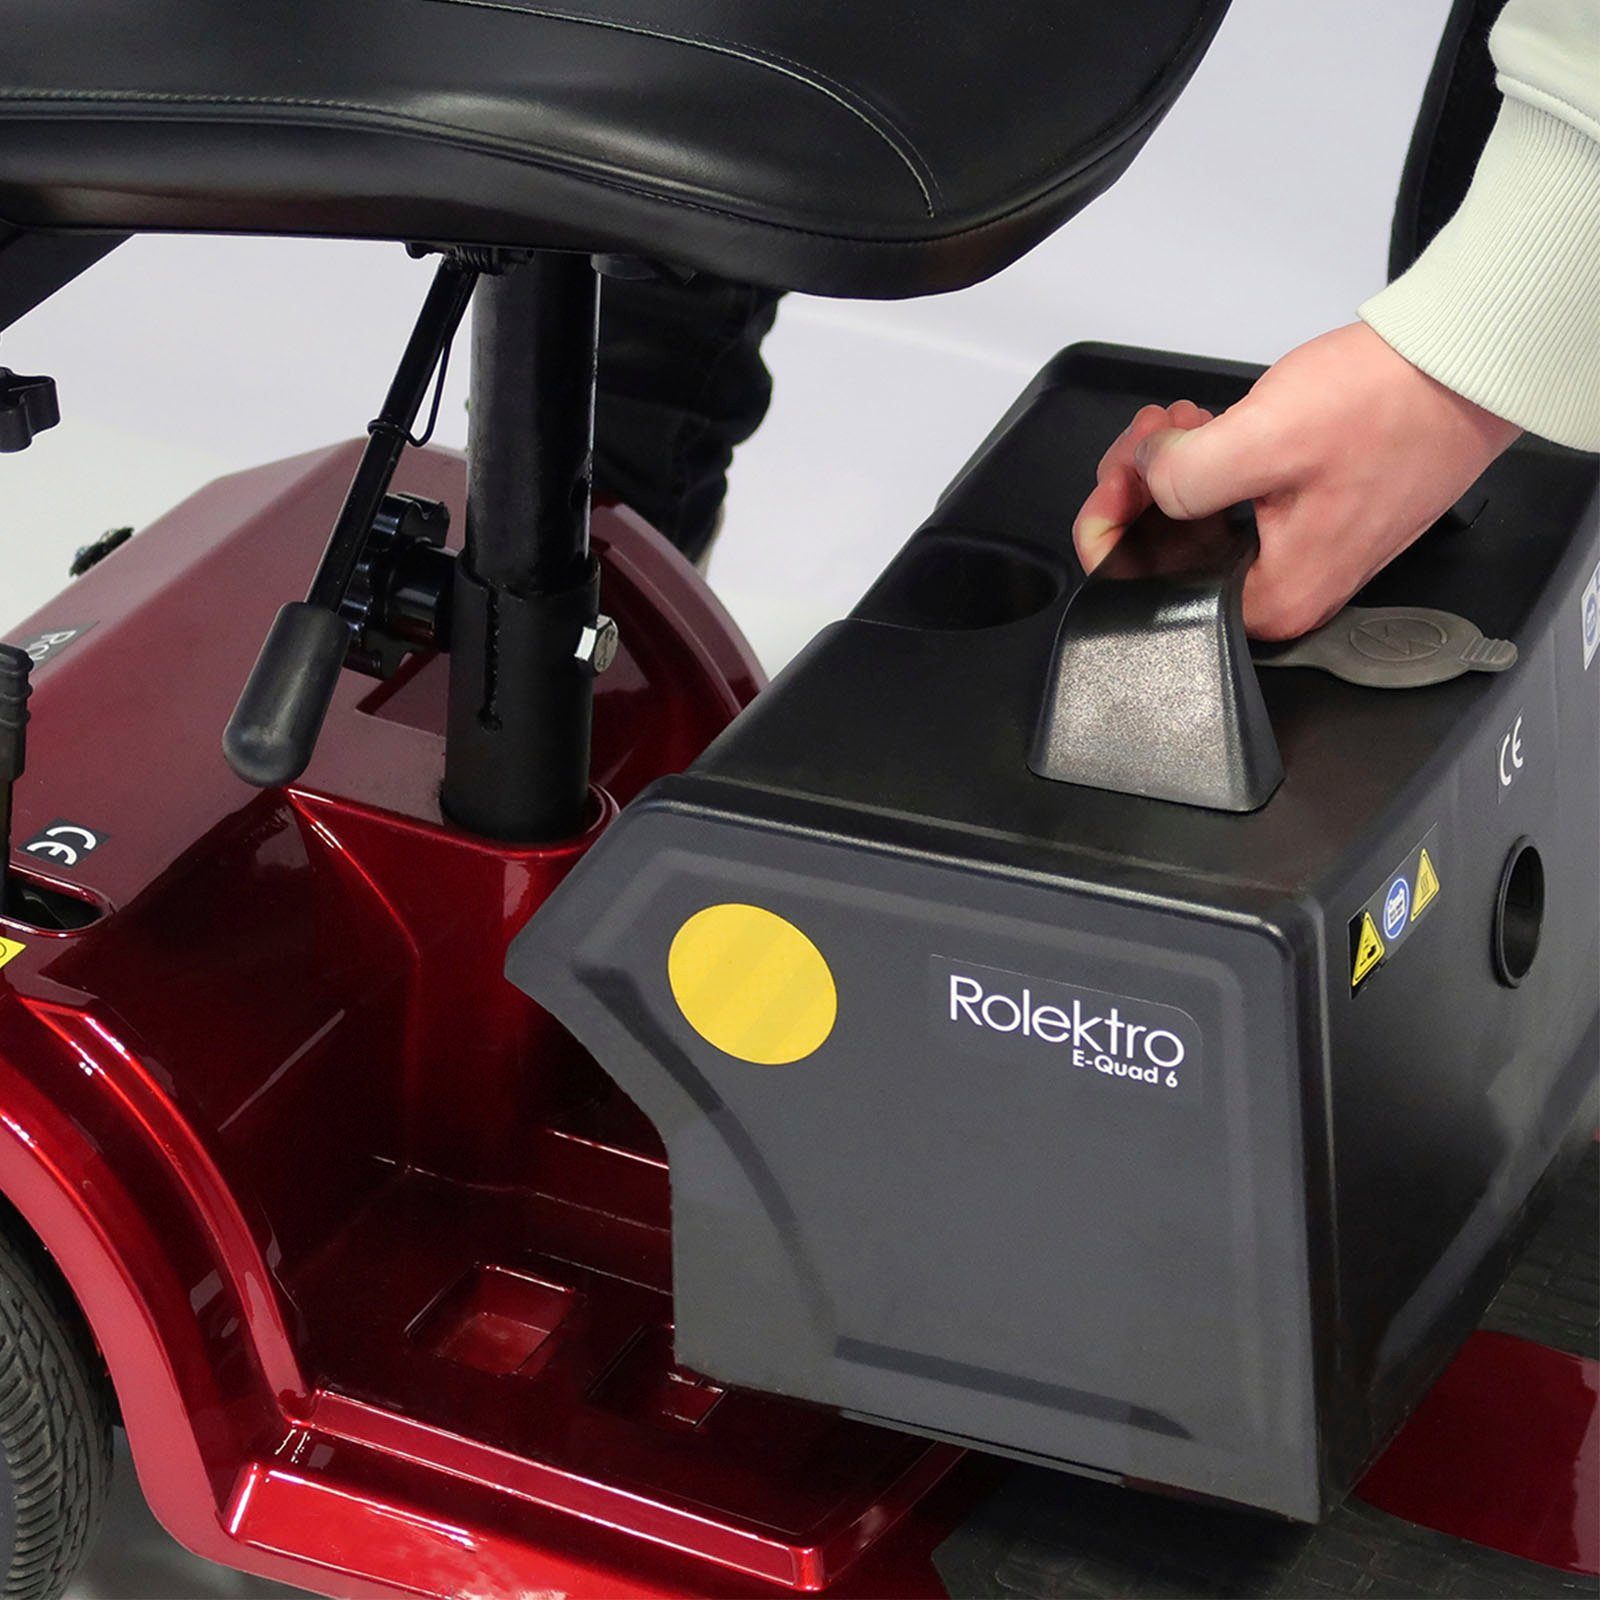 Rolektro Elektromobil E-Quad 6, 300 km/h 6 W